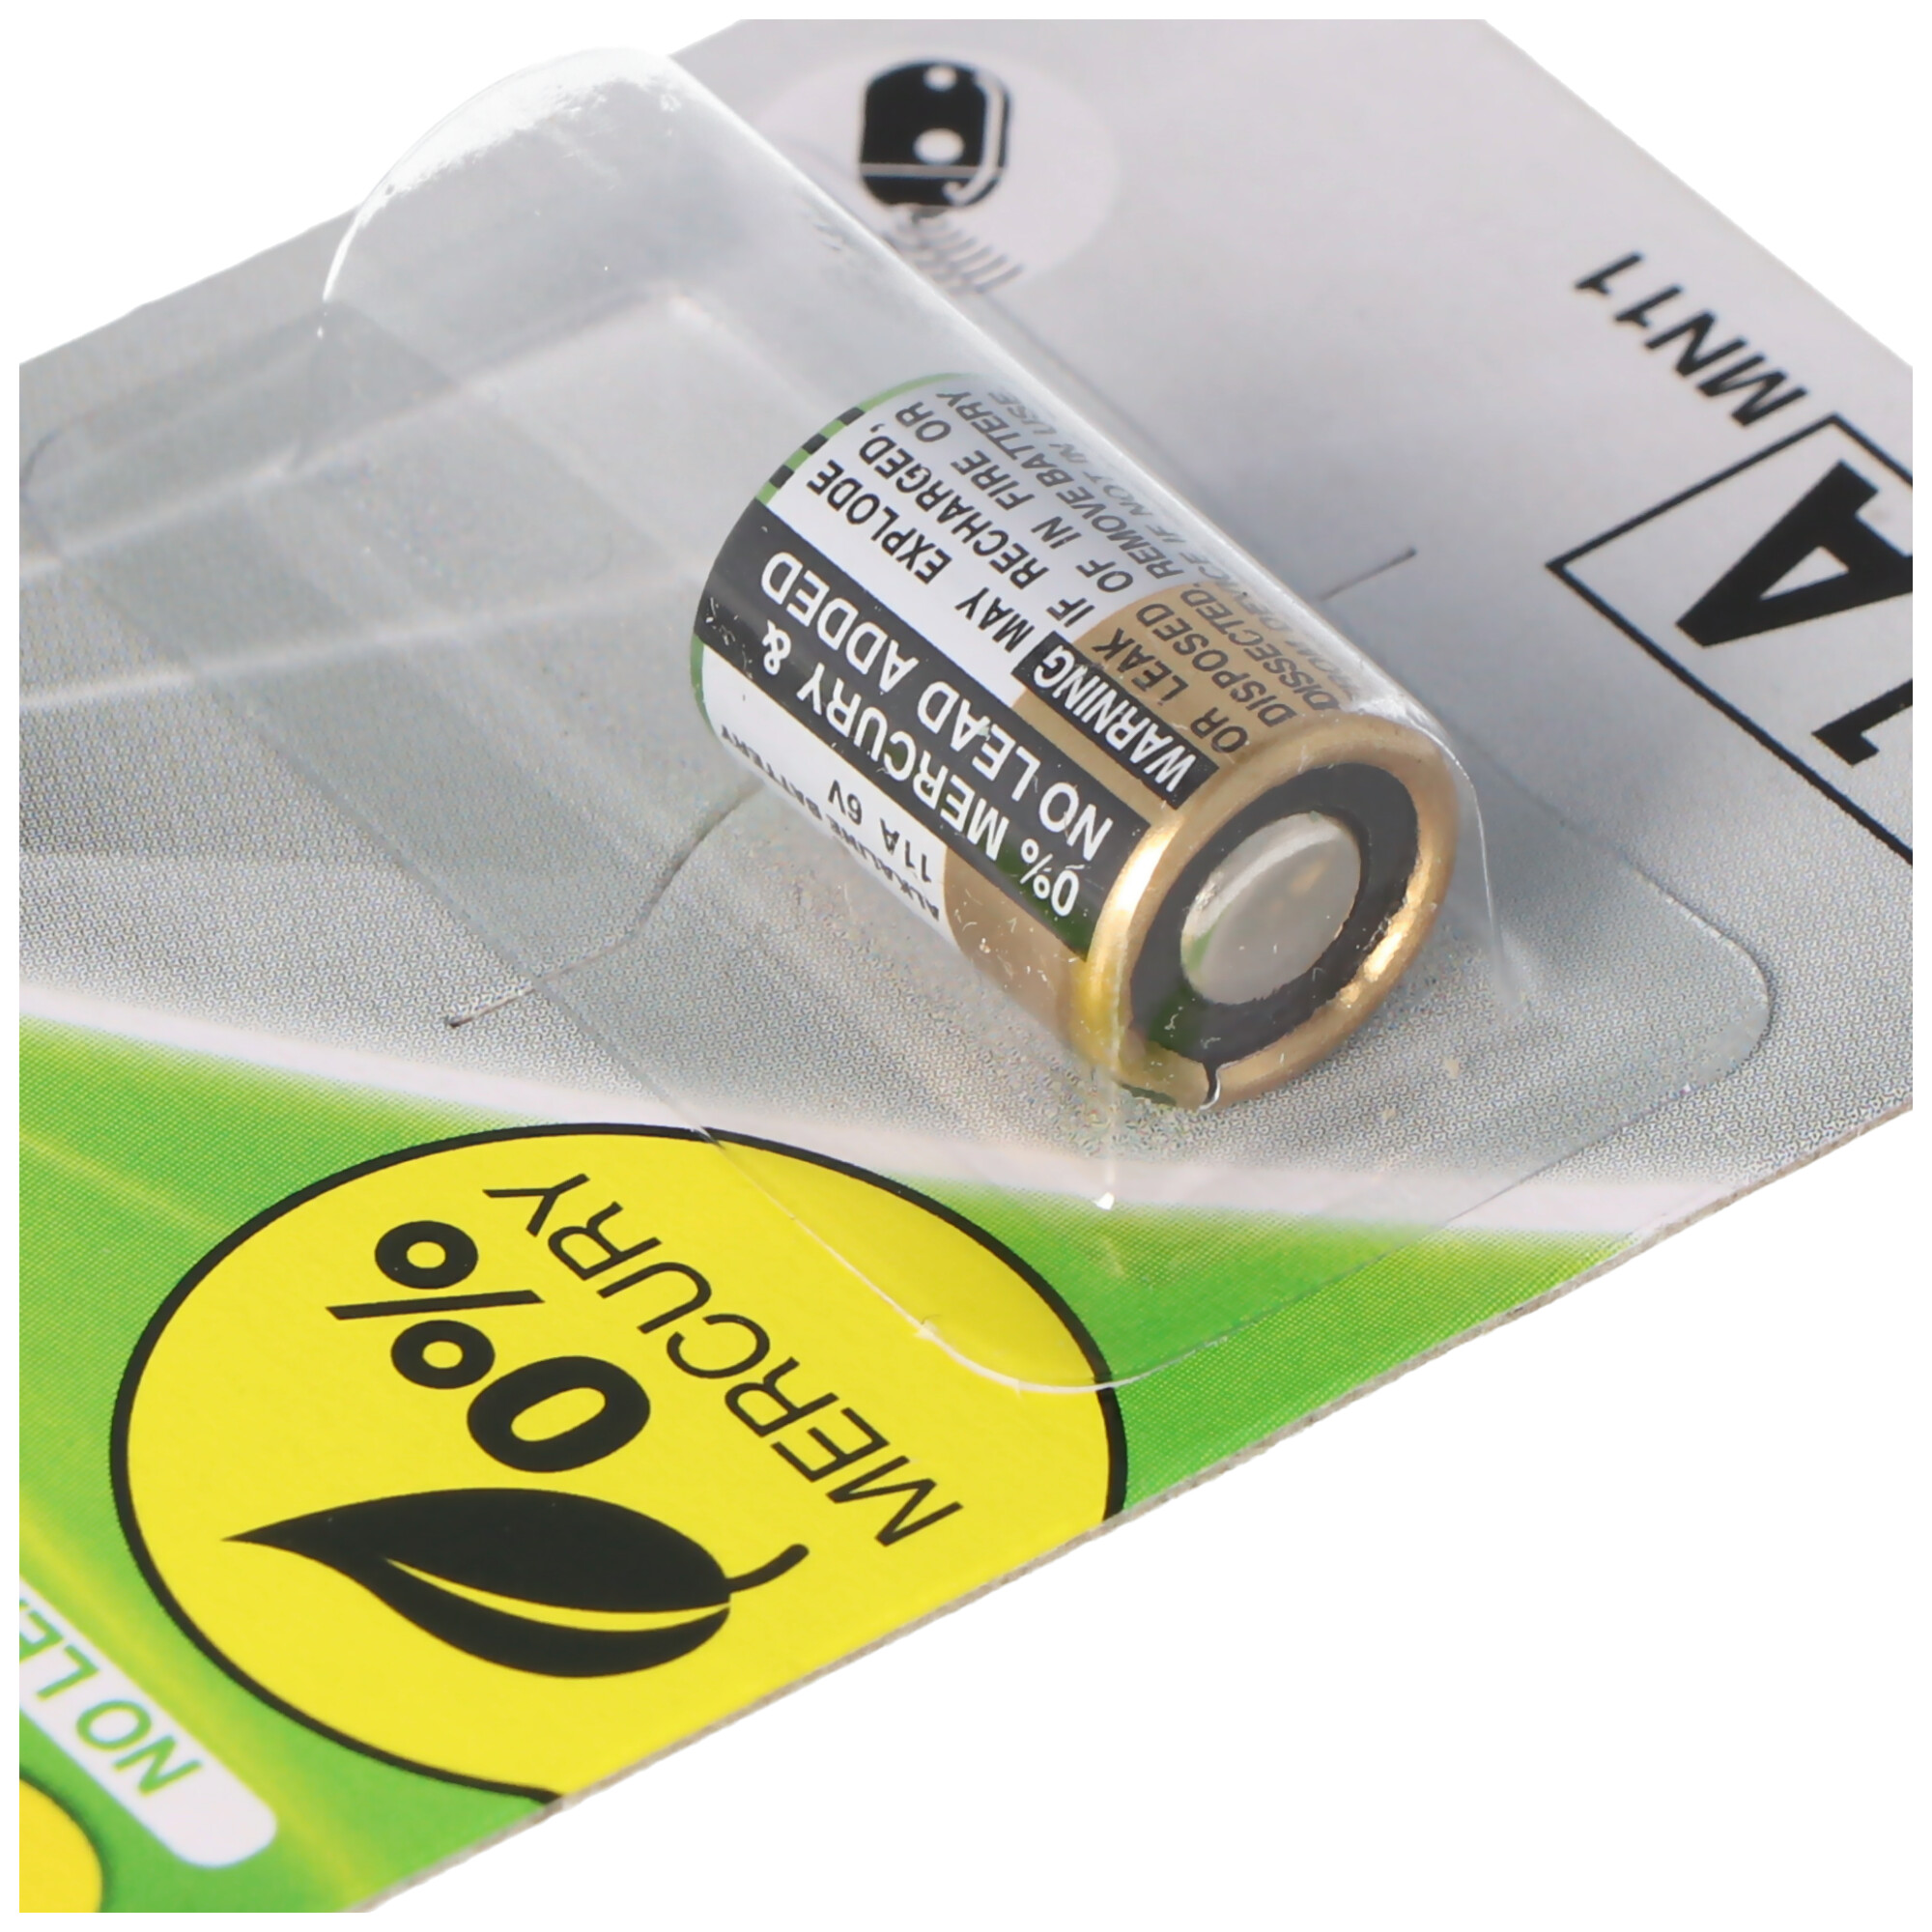 GP11A GP Batterie, 6 Volt Alkaline High Voltage Battery